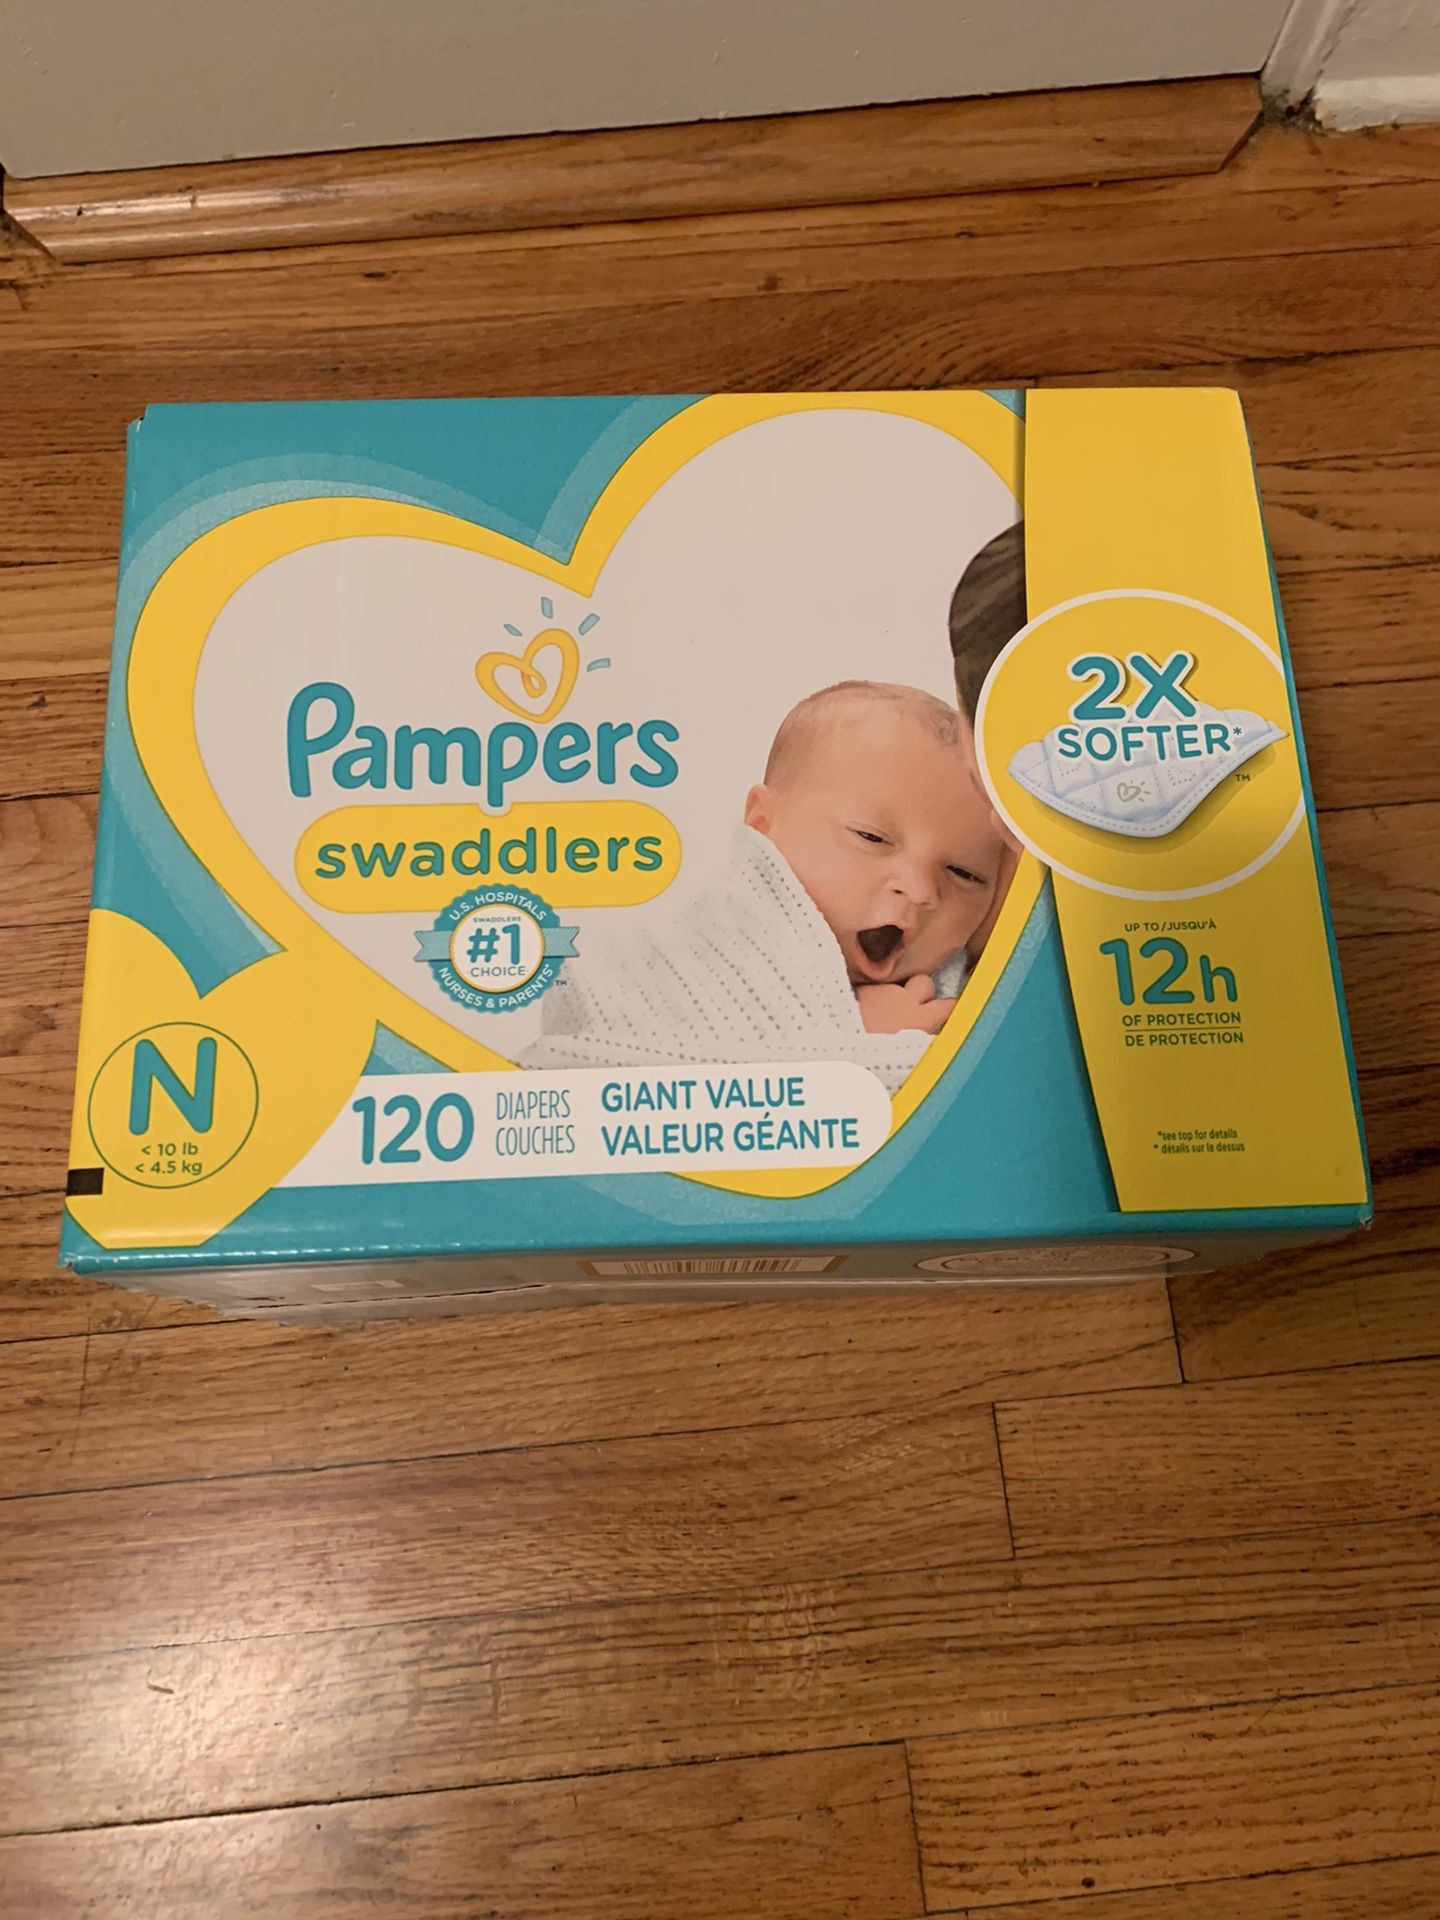 Newborn diapers box never open!